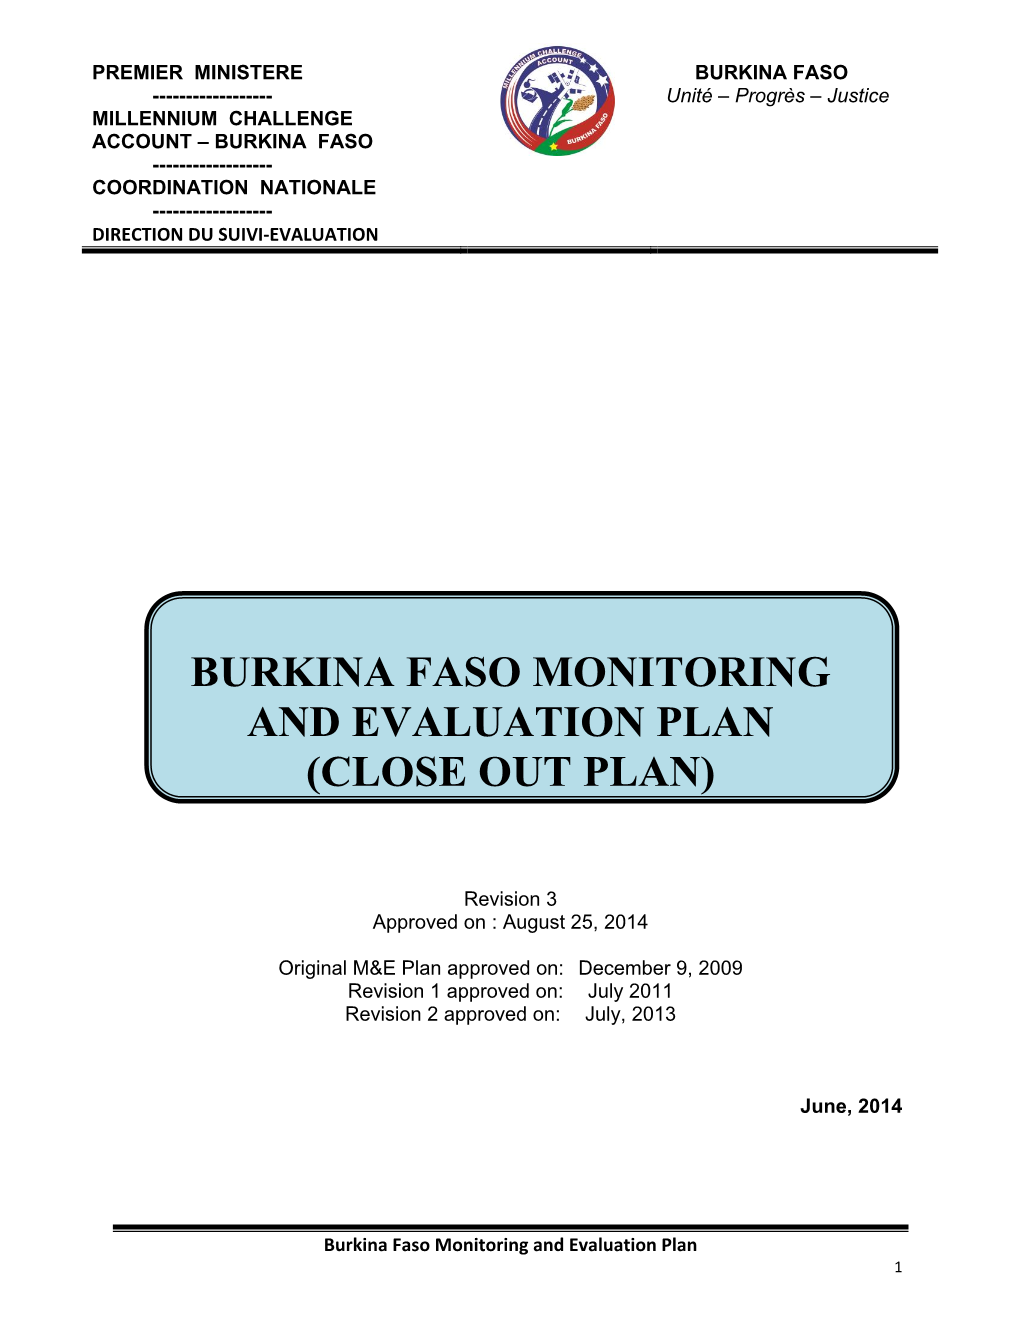 Burkina Faso Monitoring and Evaluation Plan (Close out Plan)